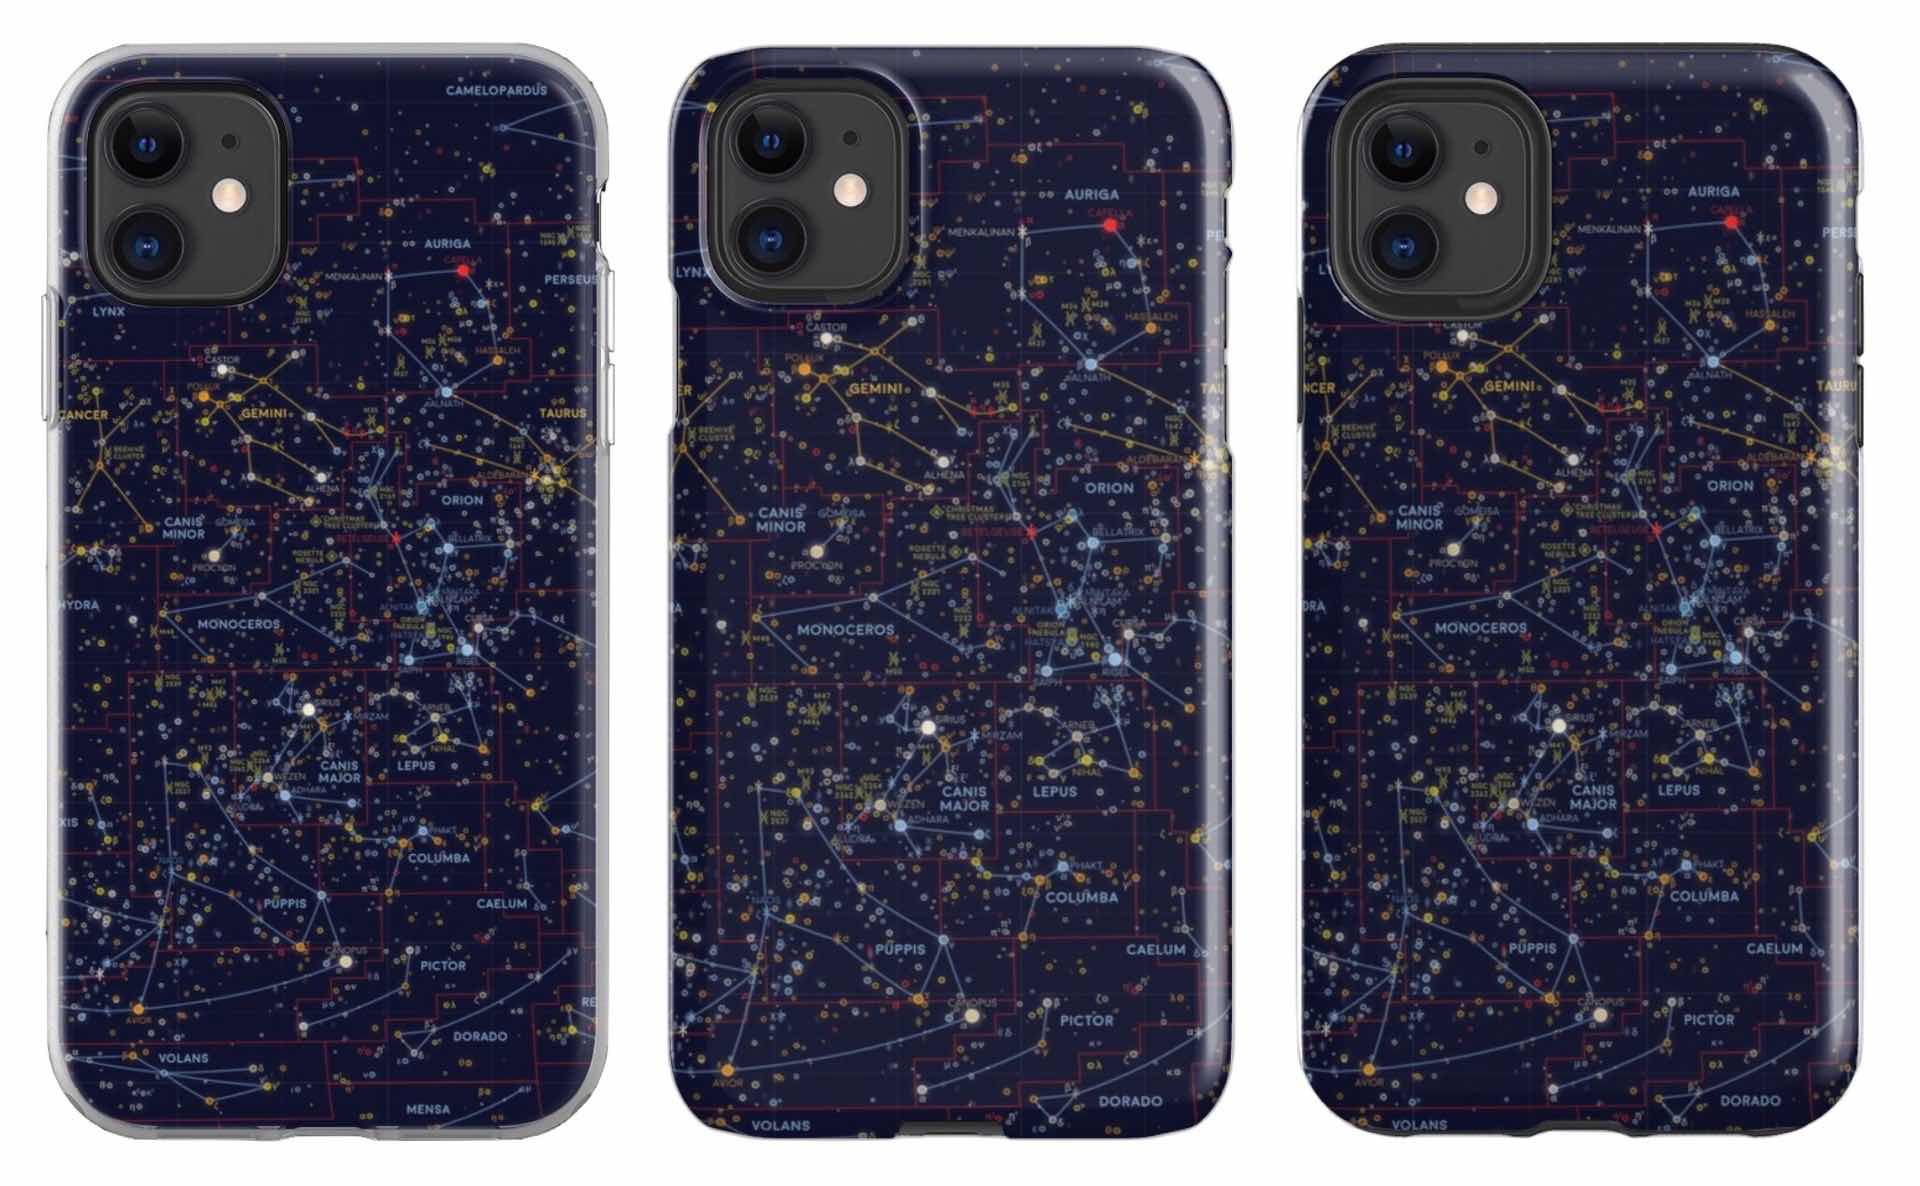 eleanor-lutz-night-sky-constellation-map-iphone-cases